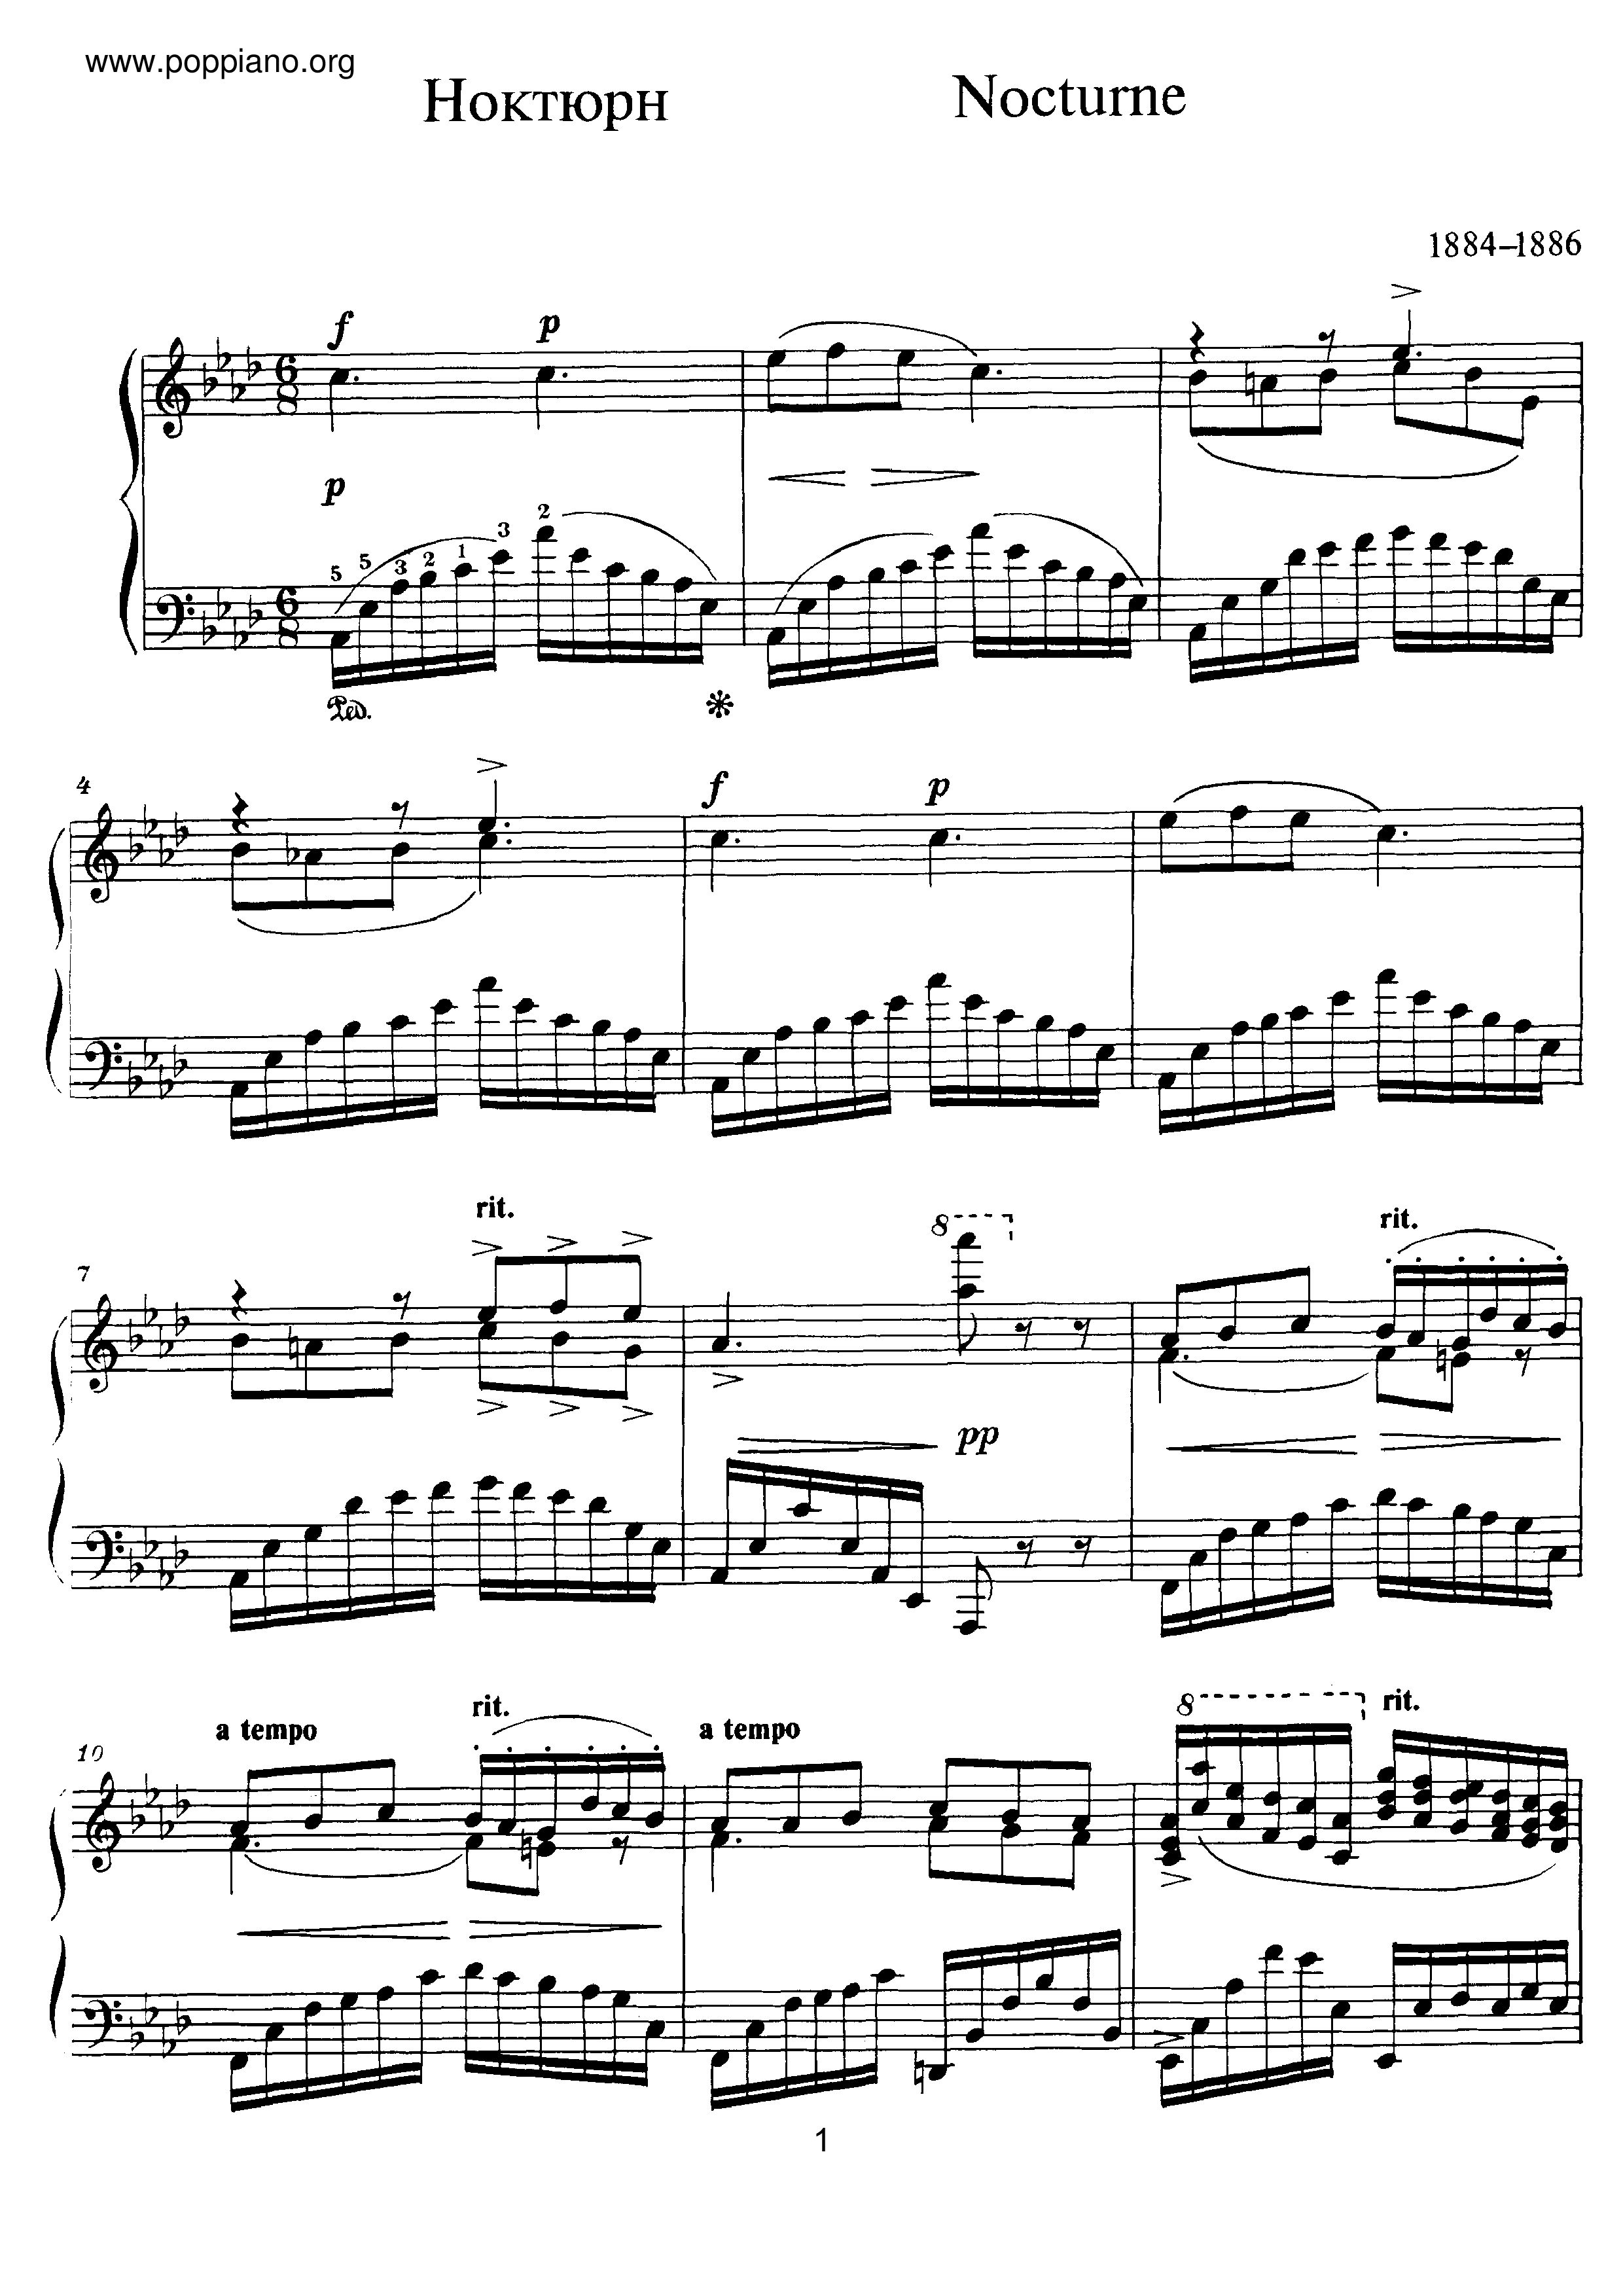 Nocturne in Ab Majorピアノ譜